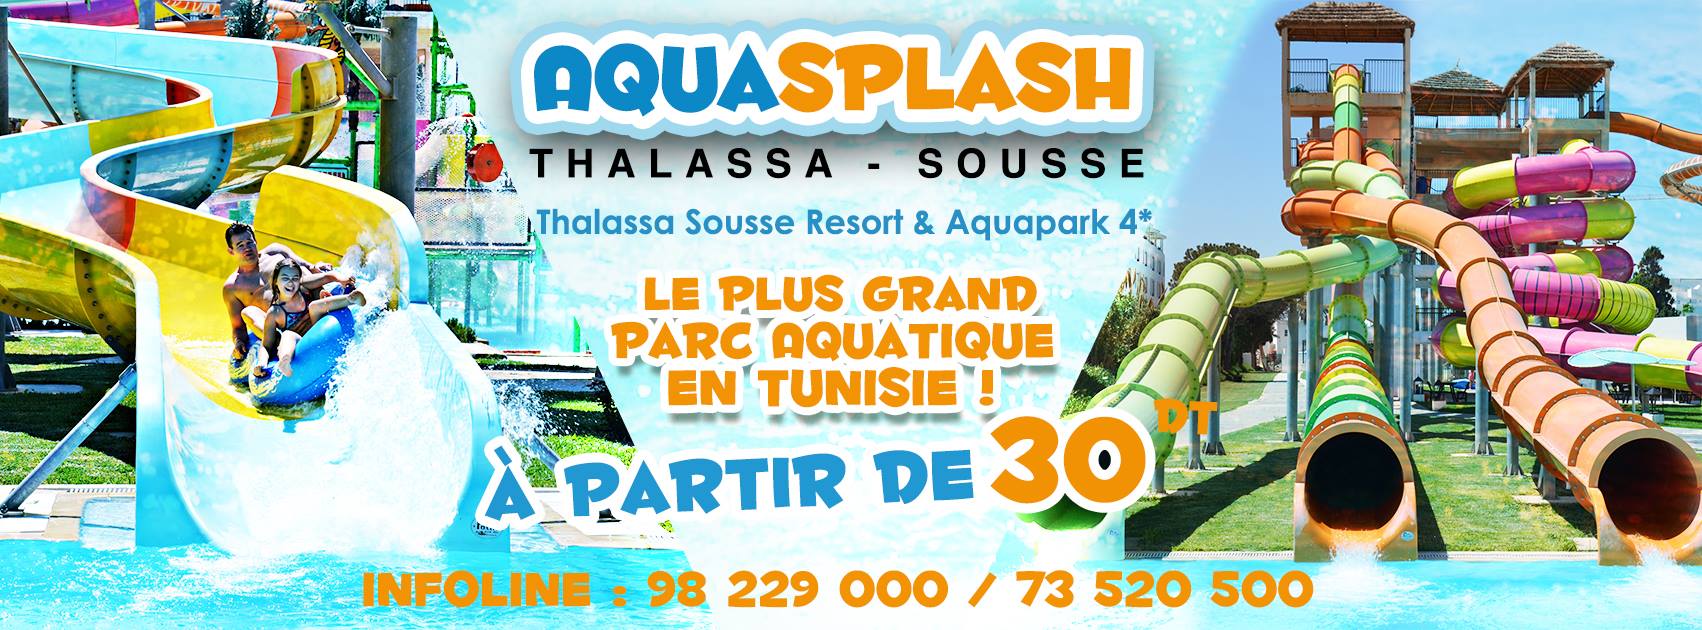 Aquasplash Thalassa Sousse